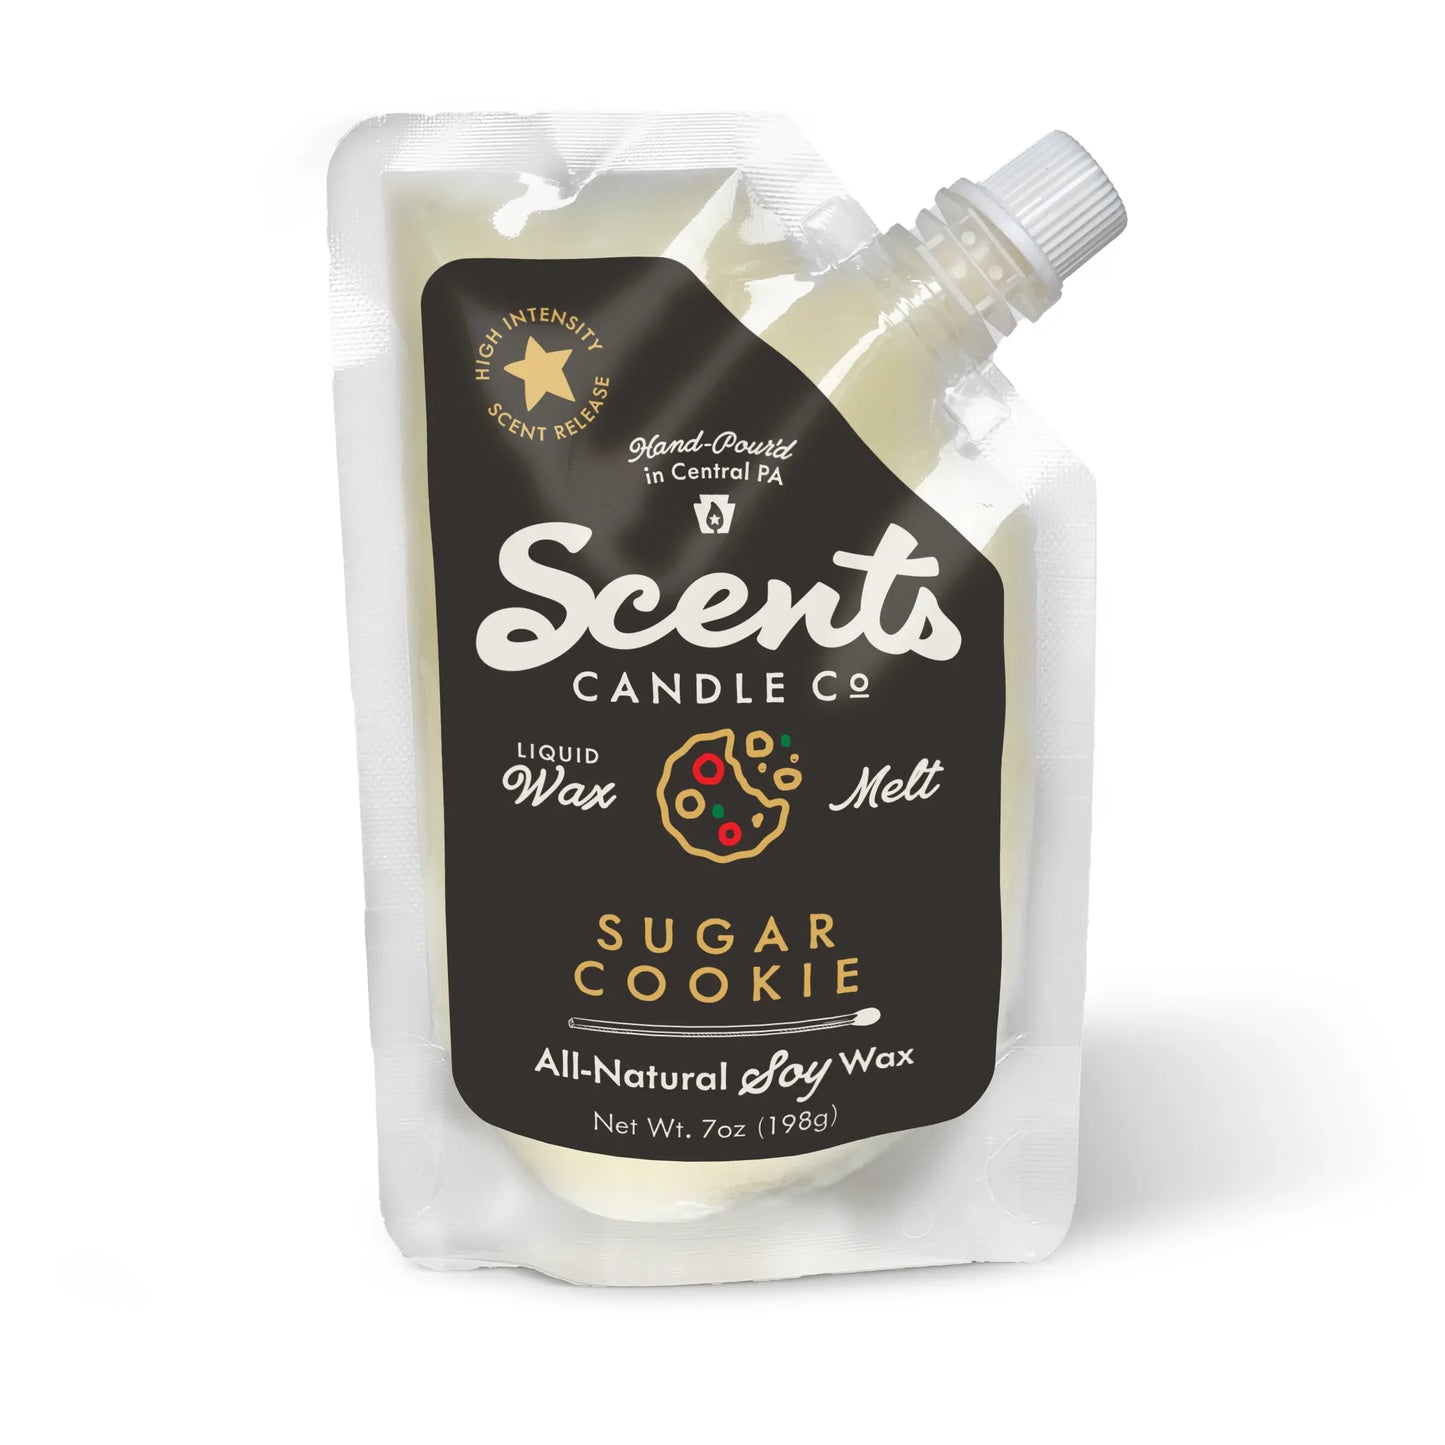 Scents Candle Co. Sugar Cookie Liquid Wax Melt